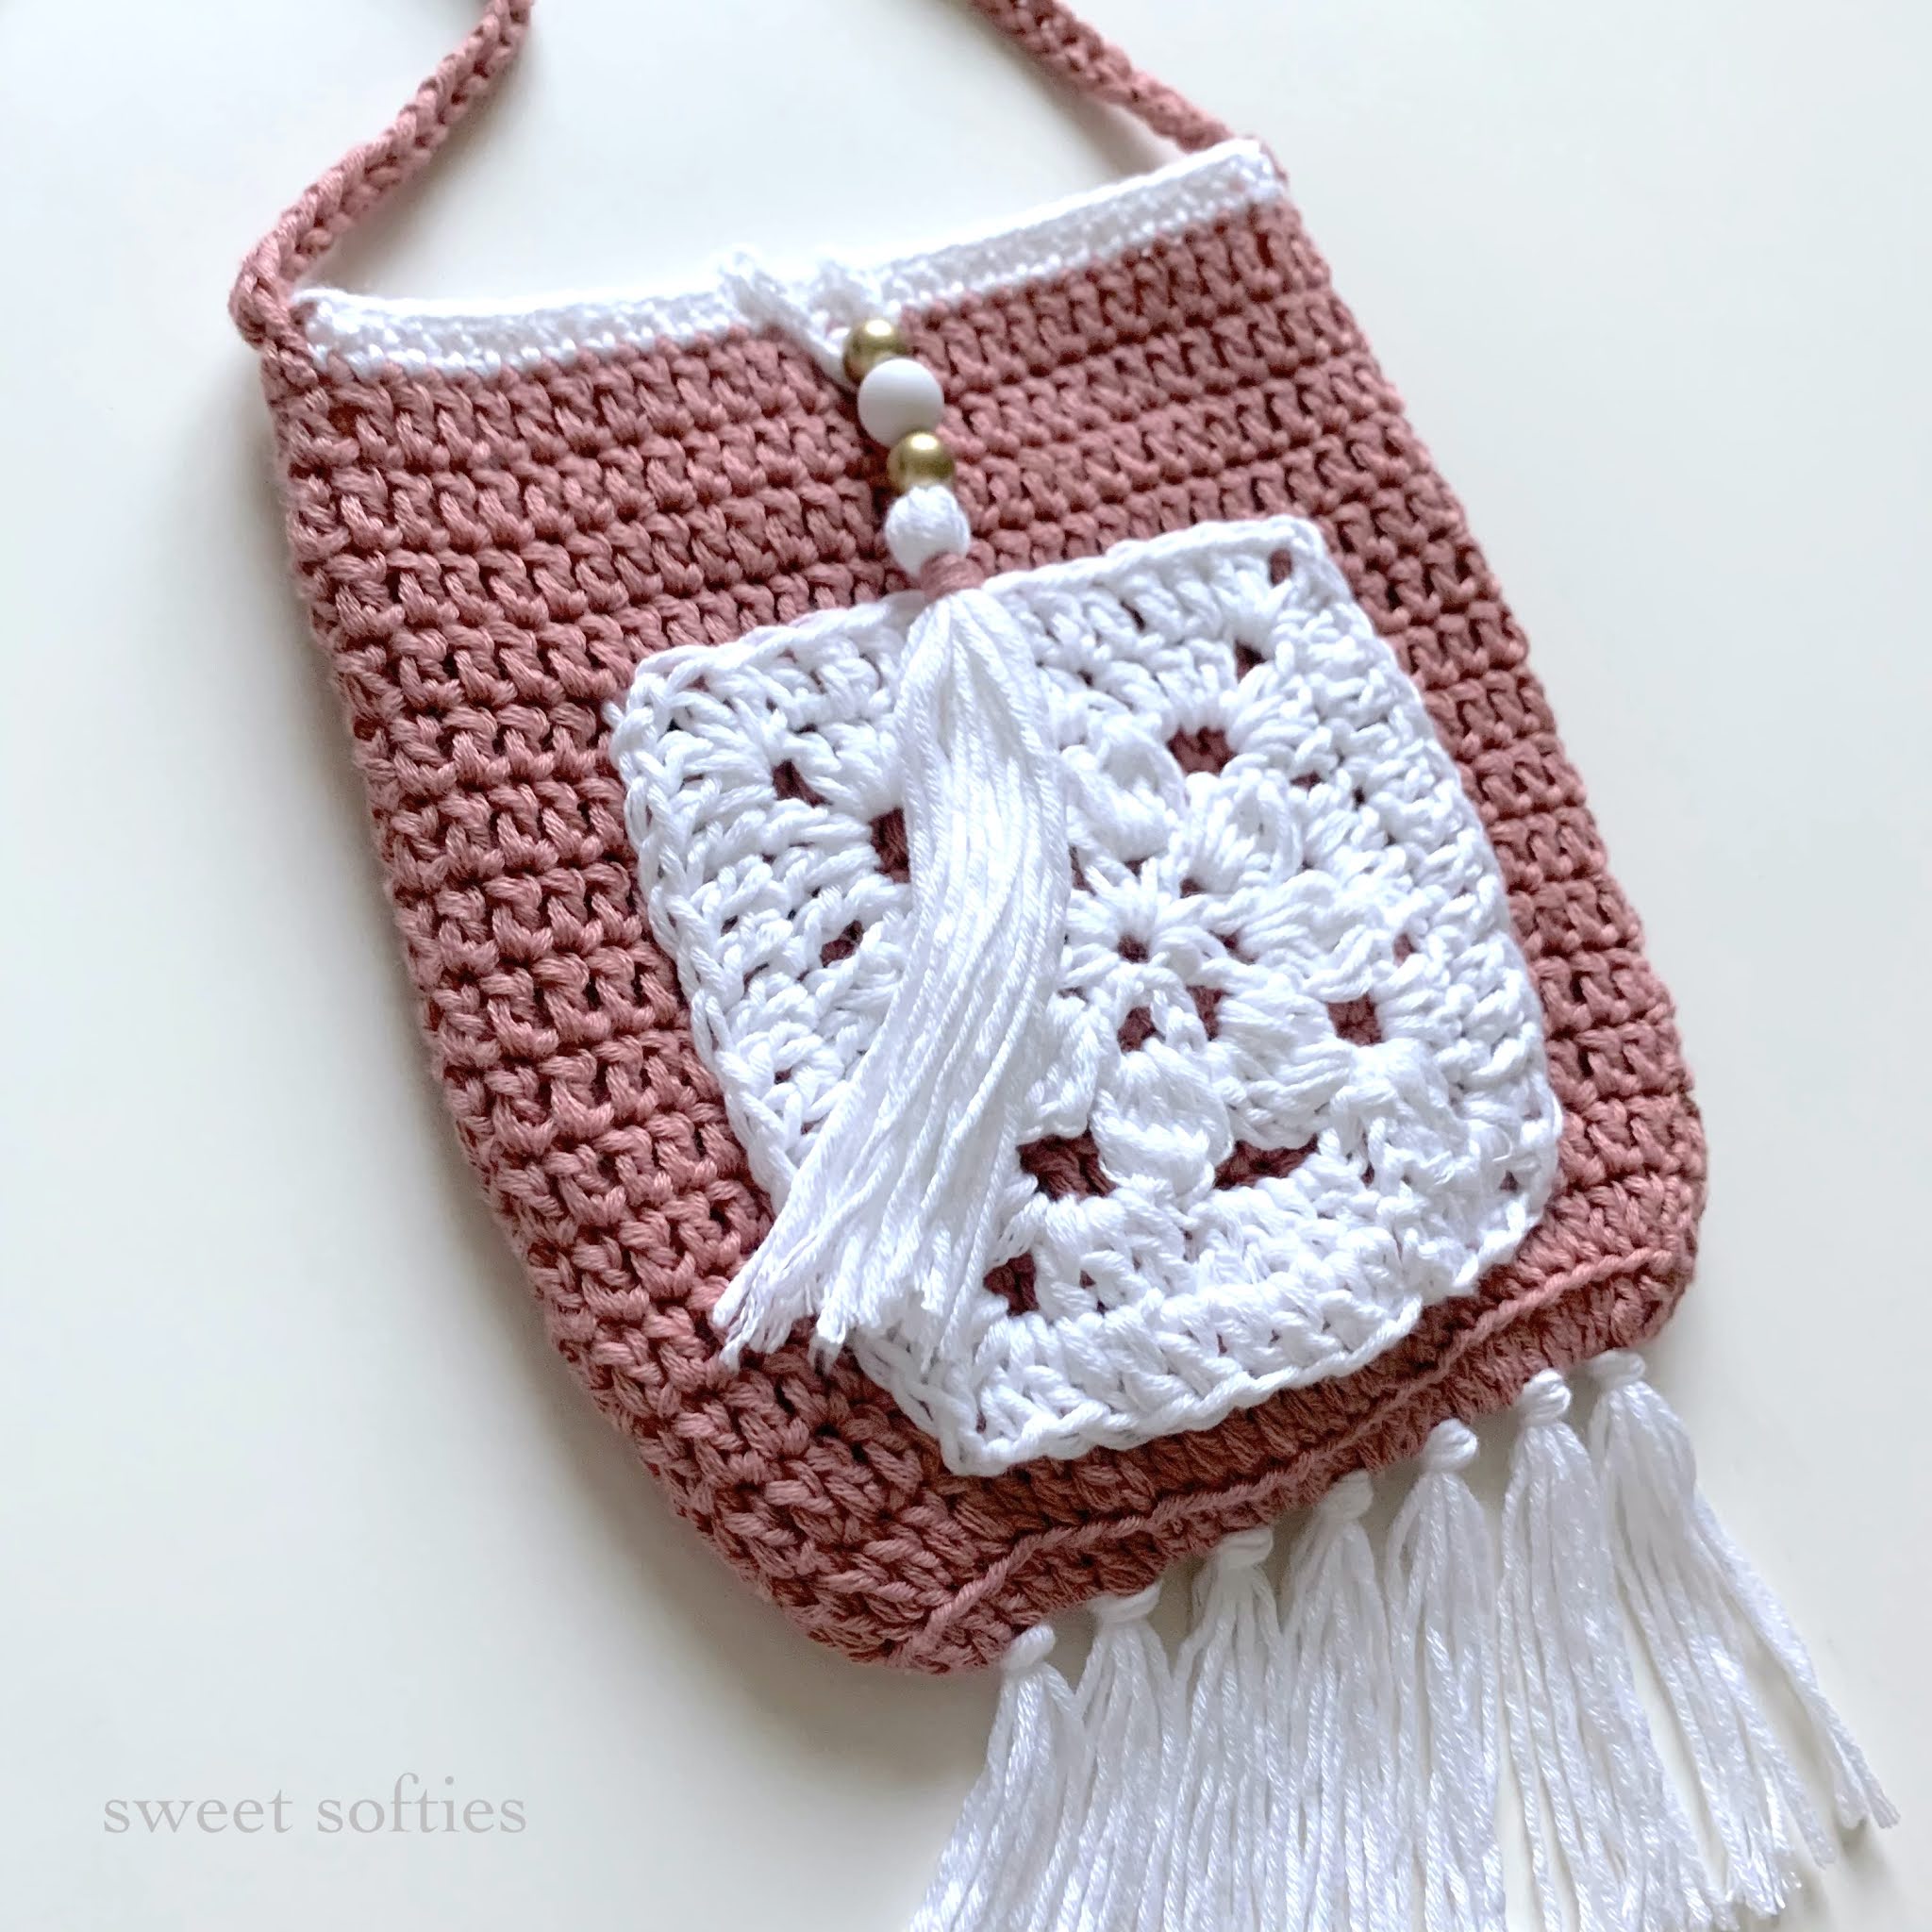 Crocheting the Modern Granny Boho Bag in Quick Steps